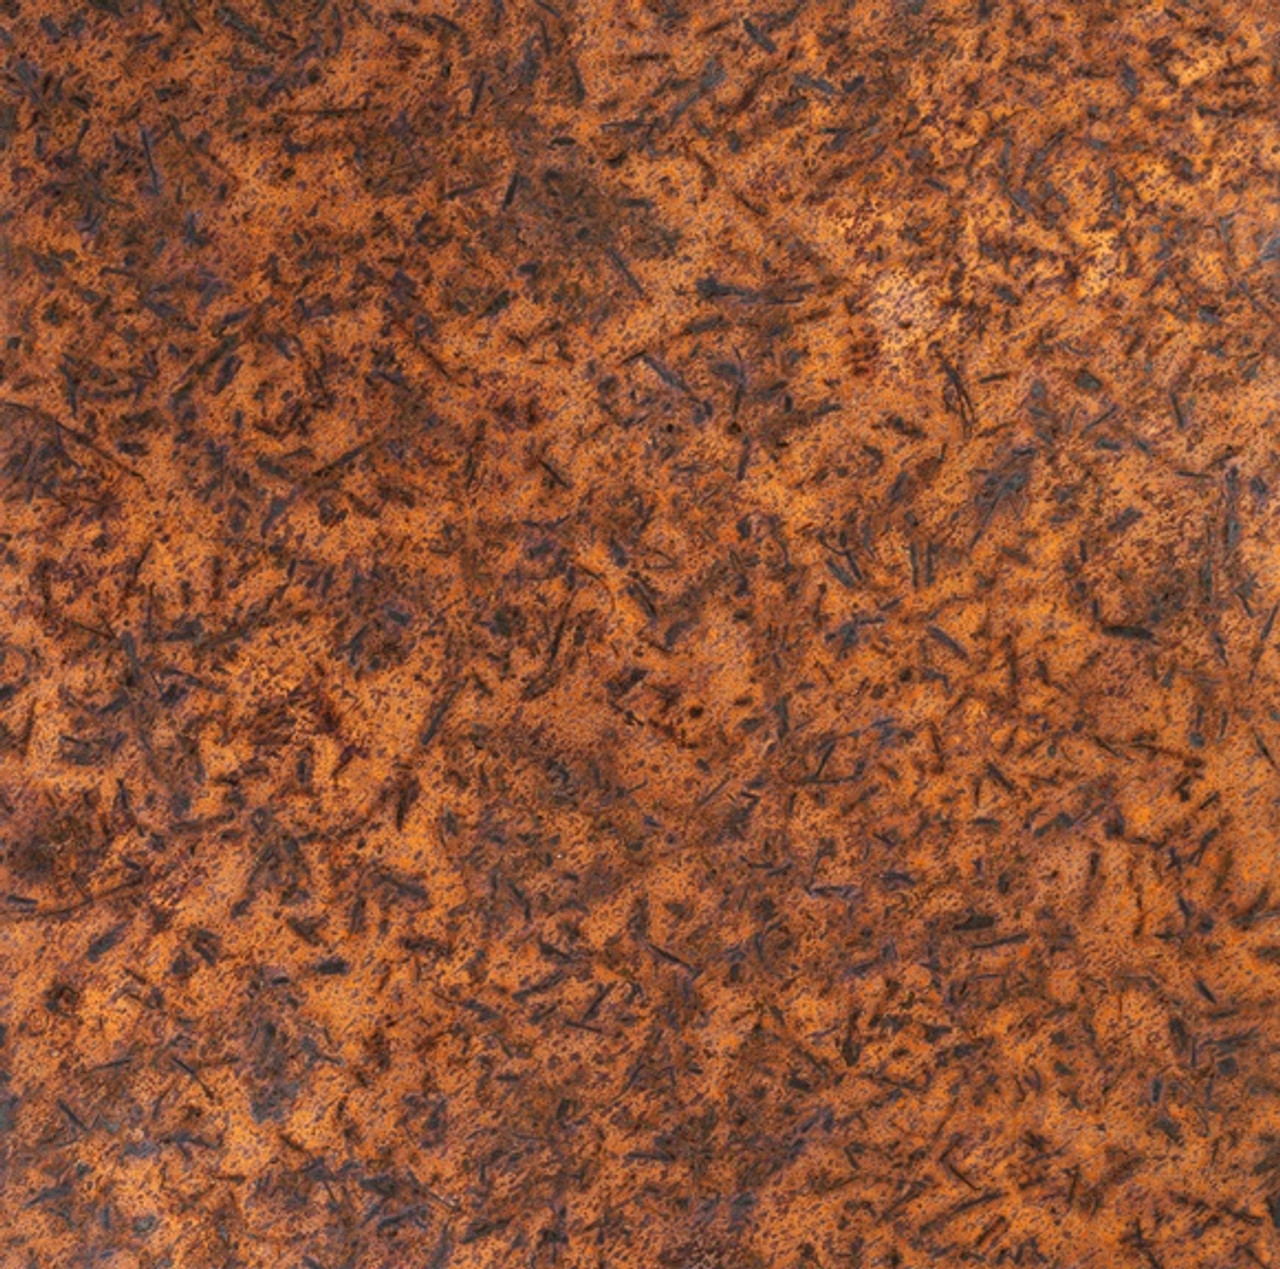 Hammered Copper Sheet-New York 24 x 24 - Basic Copper